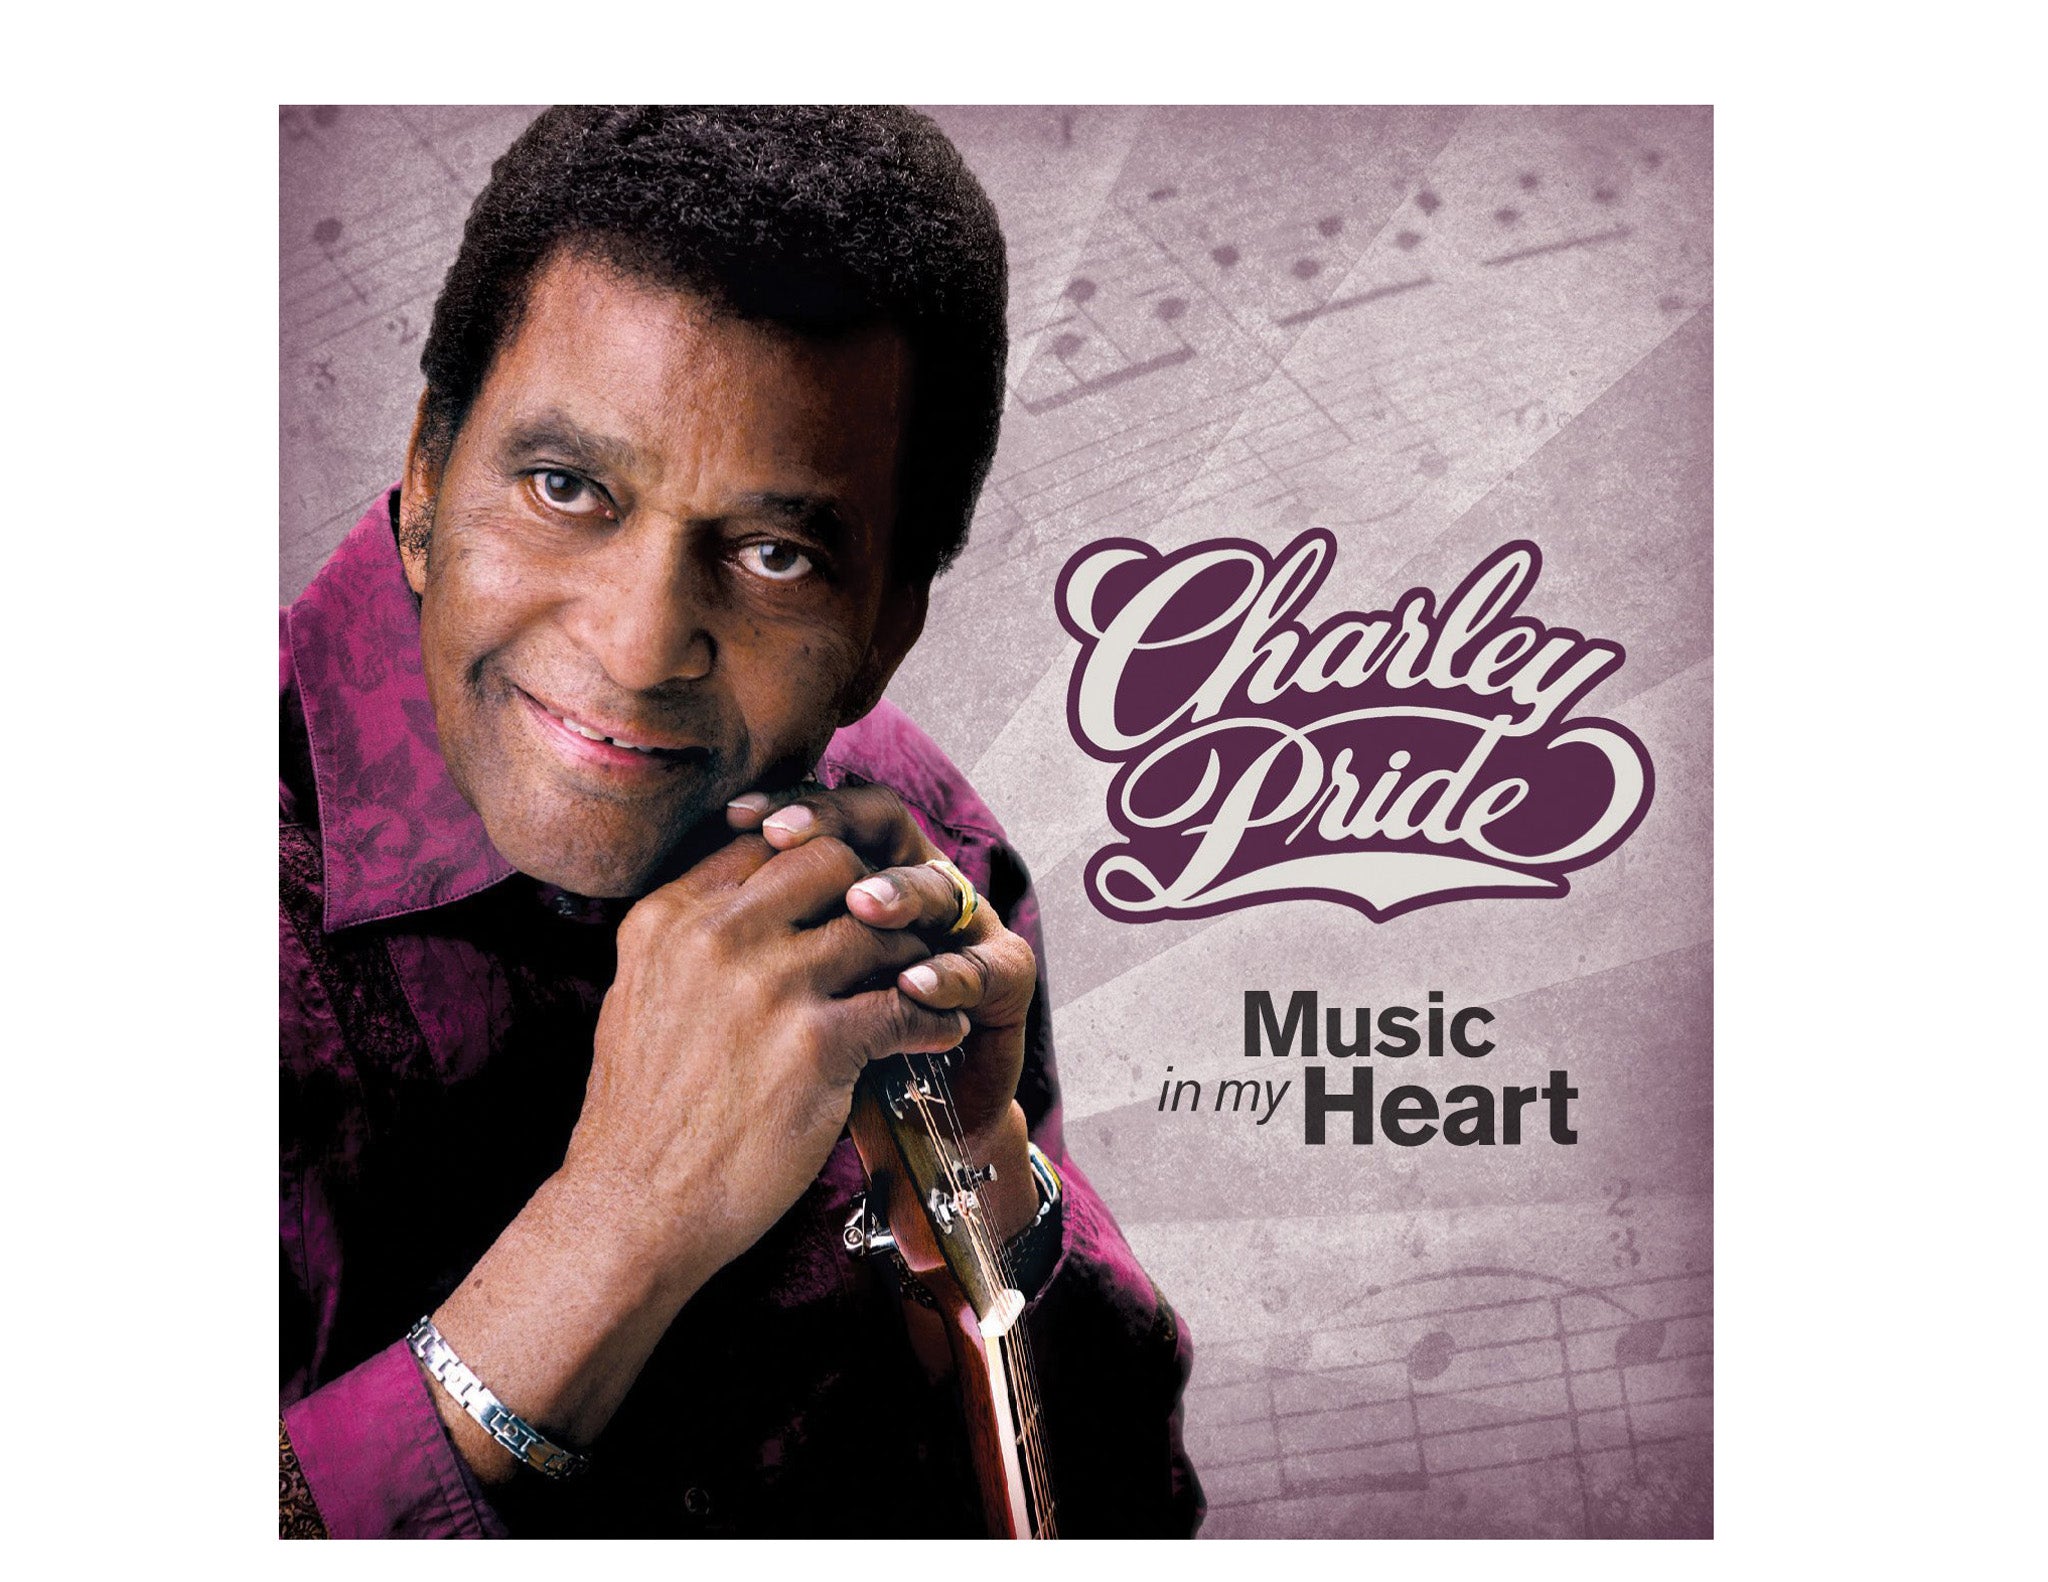 Charley Pride: Music In My Heart (CD)